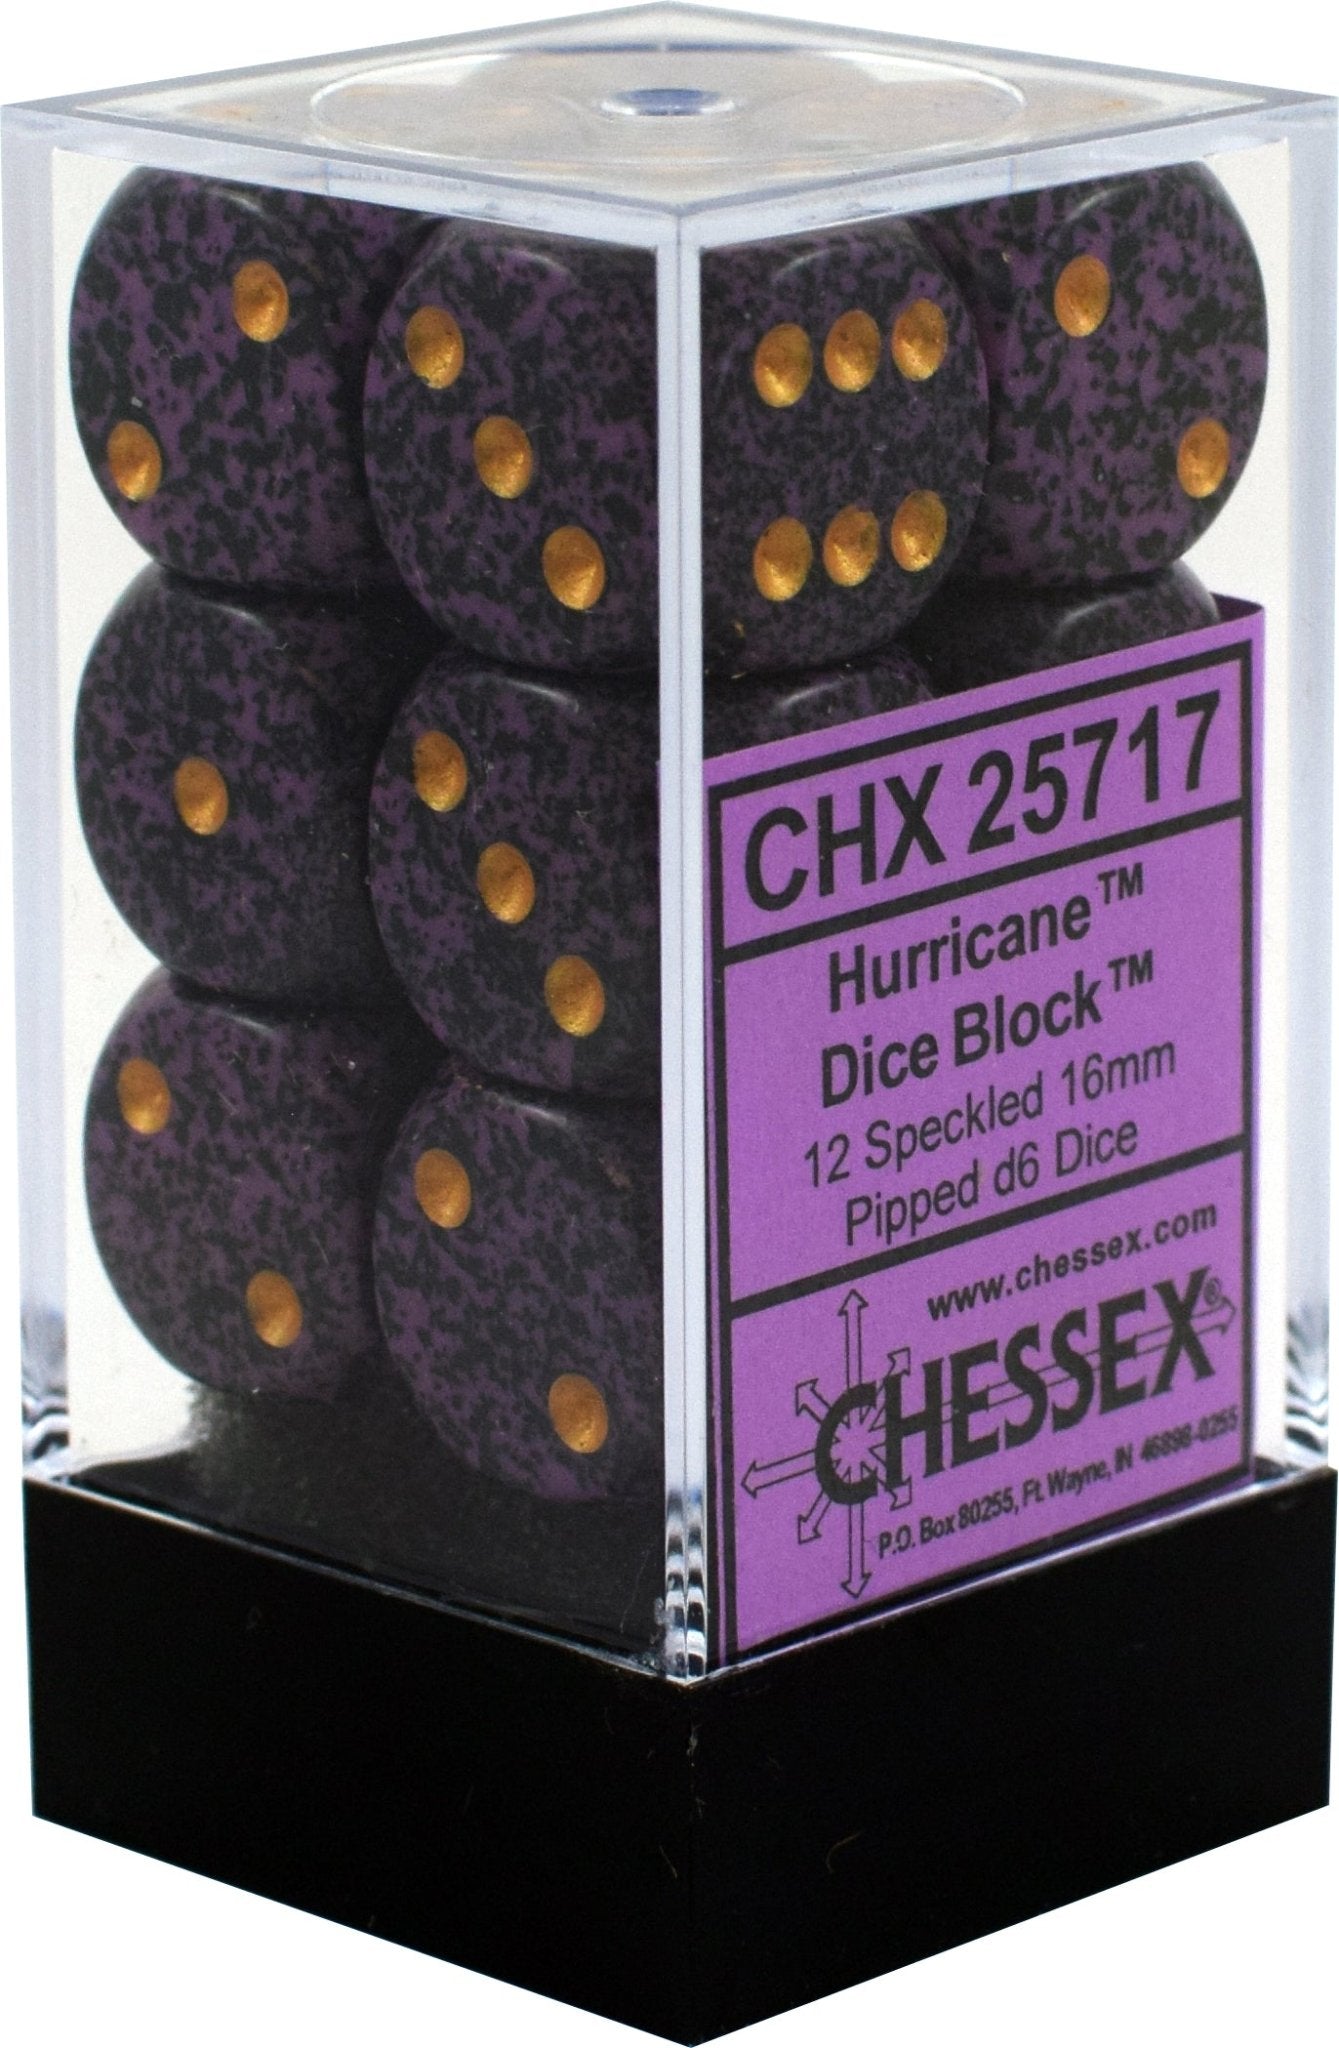 Chessex Dice: D6 Block 16mm - Speckled - Hurricane (CHX 25717) - Gamescape